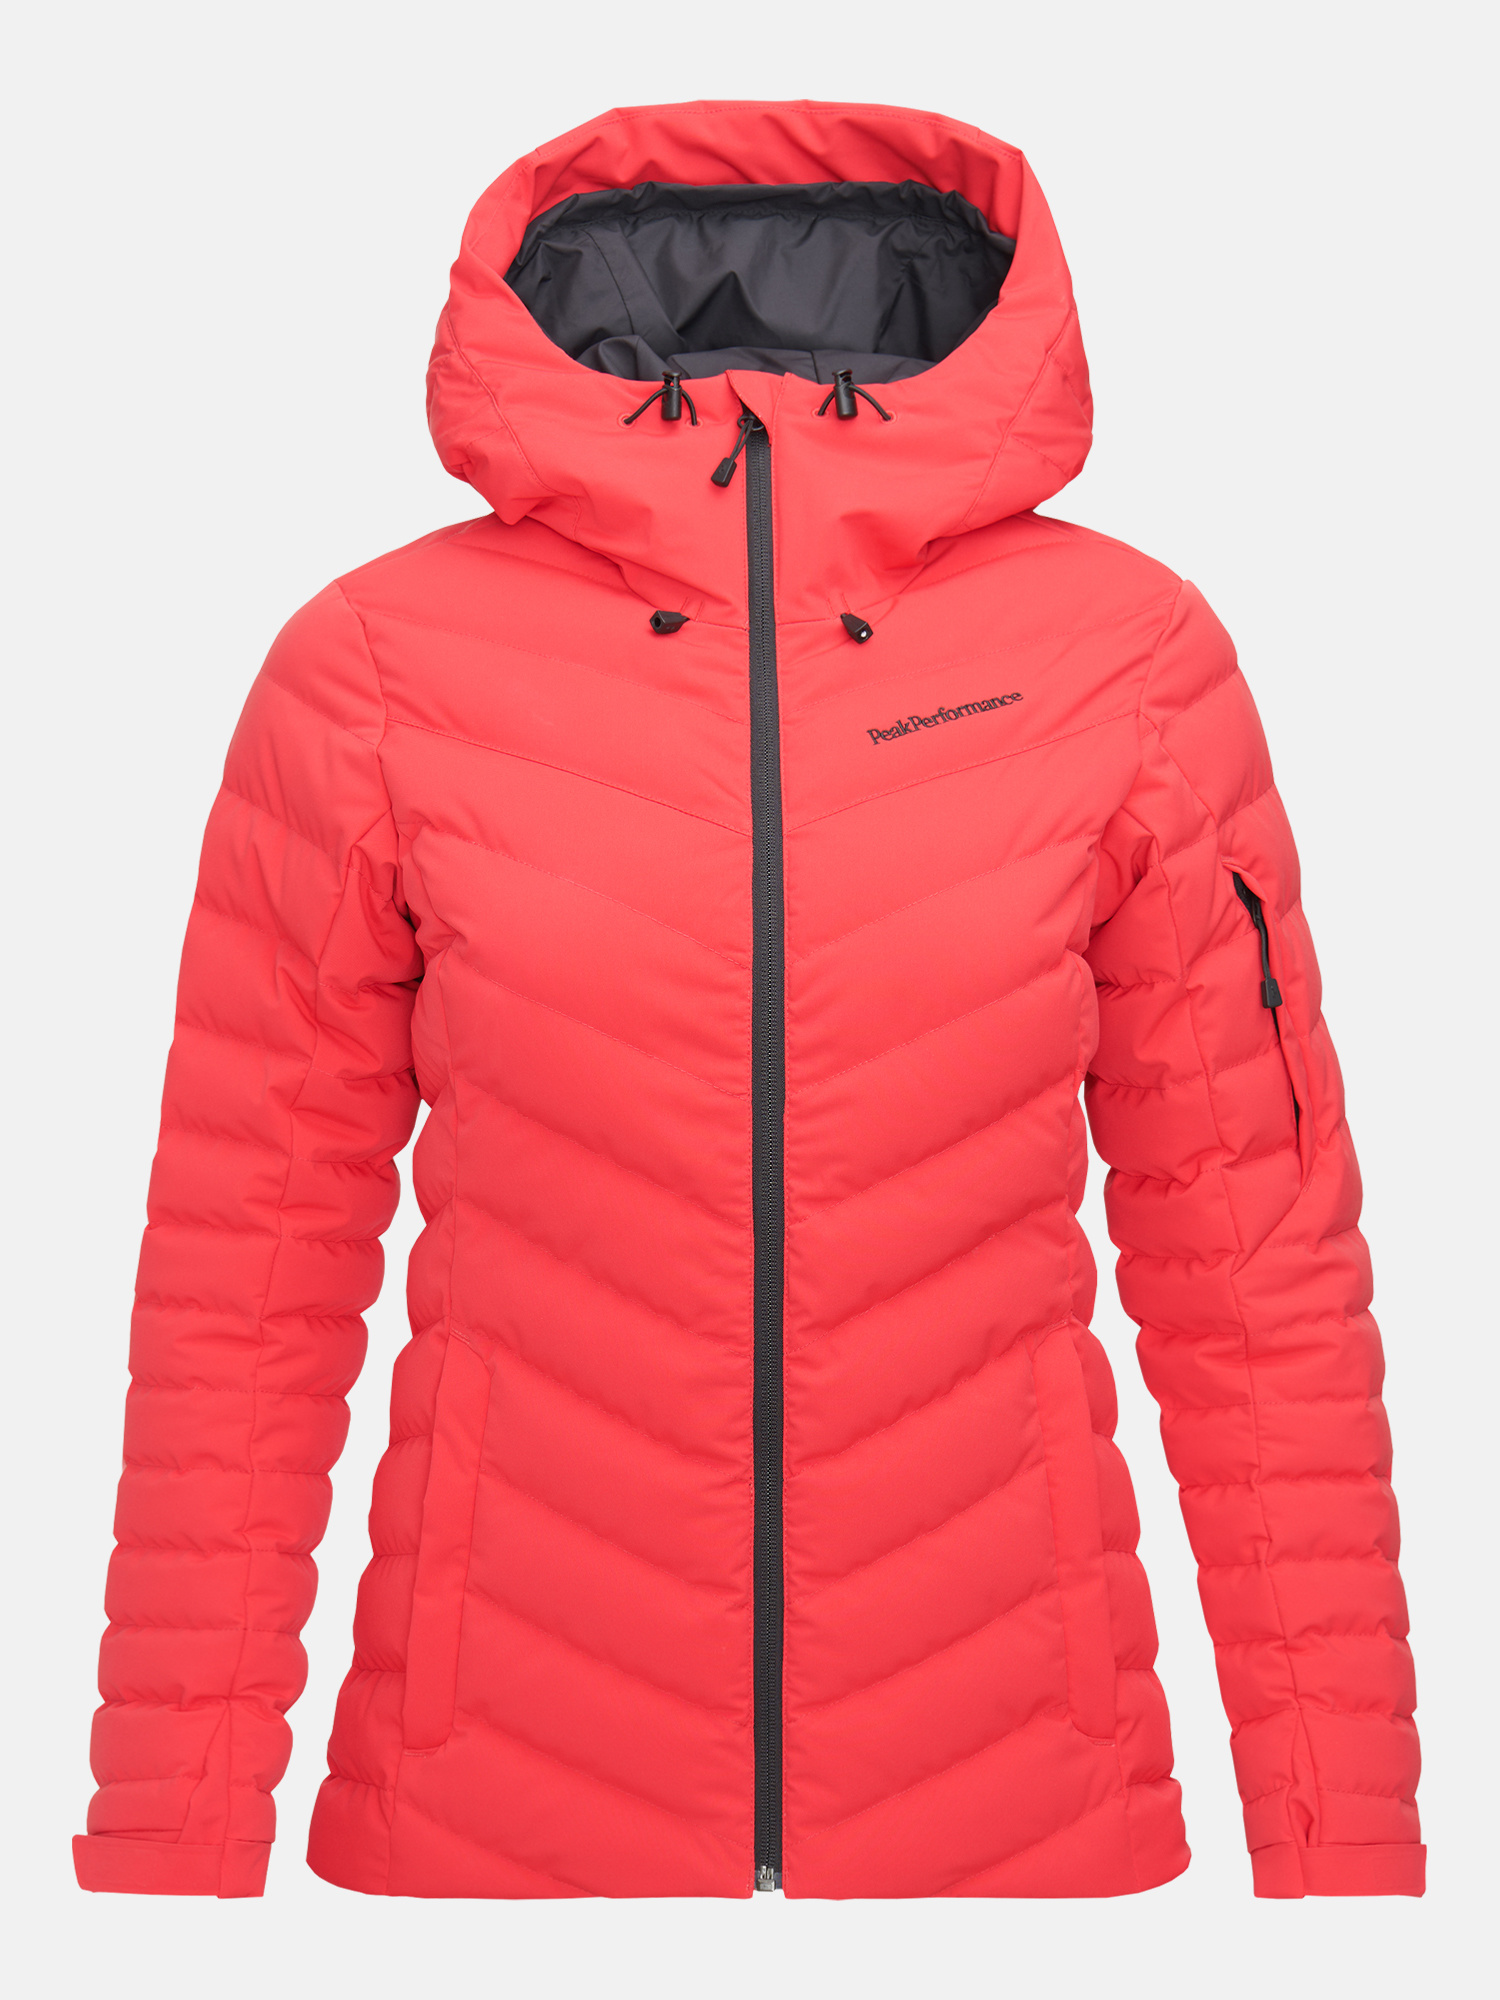 Agnes Gray Omleiding Op te slaan Peak Performance Women's Frost Ski Jacket – Polar Red - Free Style Sport